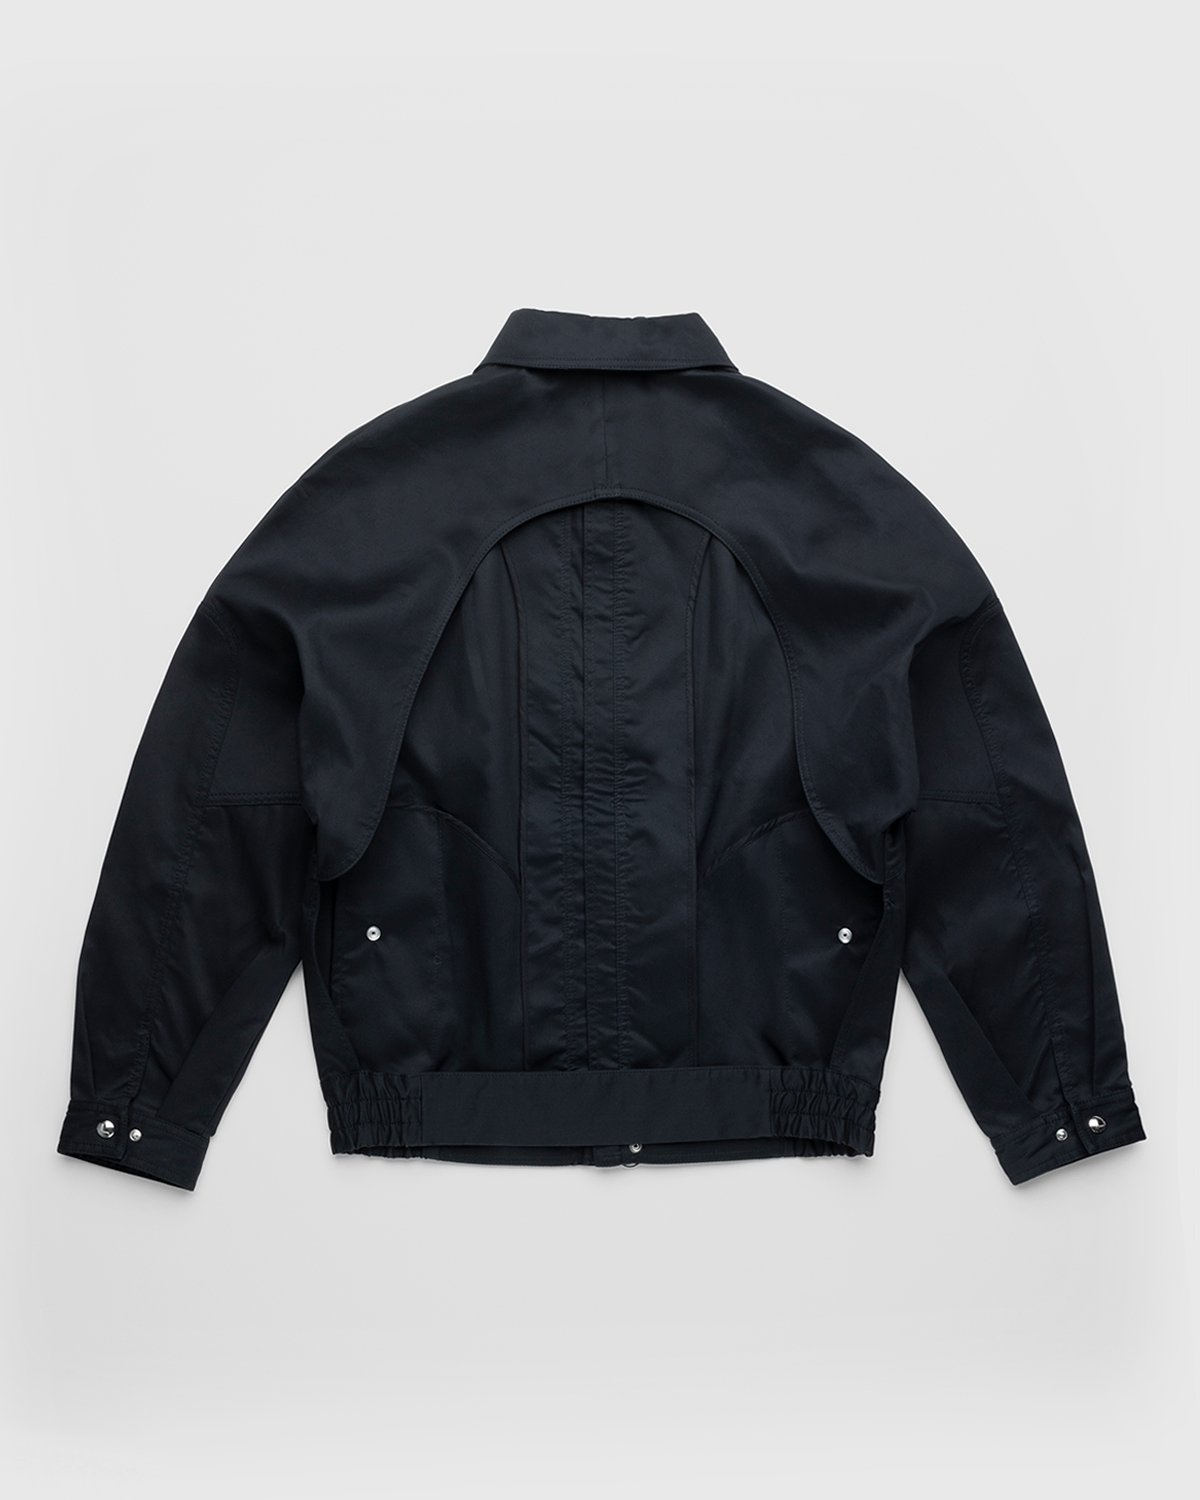 Lourdes New York – Backless Jacket Black - Outerwear - Black - Image 2